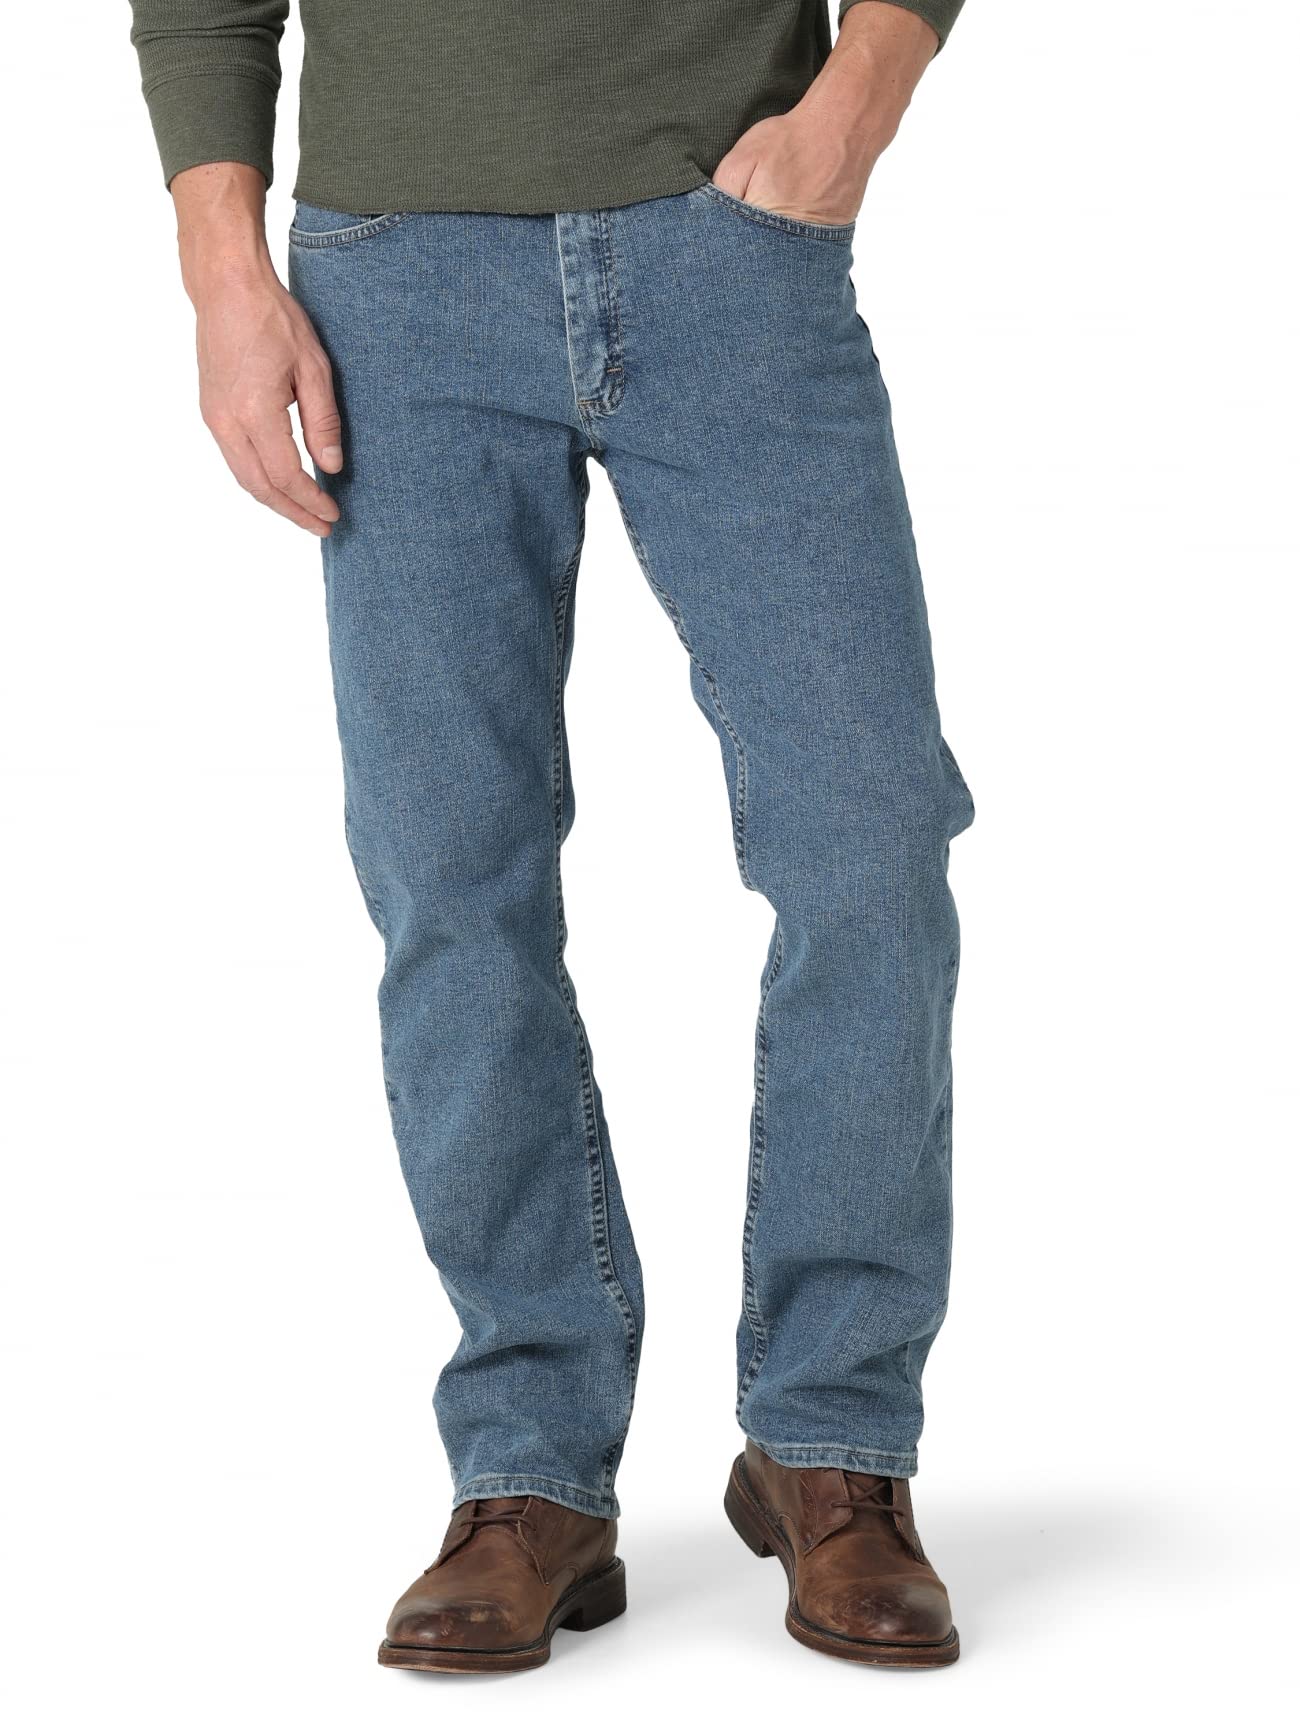 Wrangler Authentics Men's Regular Fit Comfort Flex Waist Jean, Light Stonewash, 31W x 32L